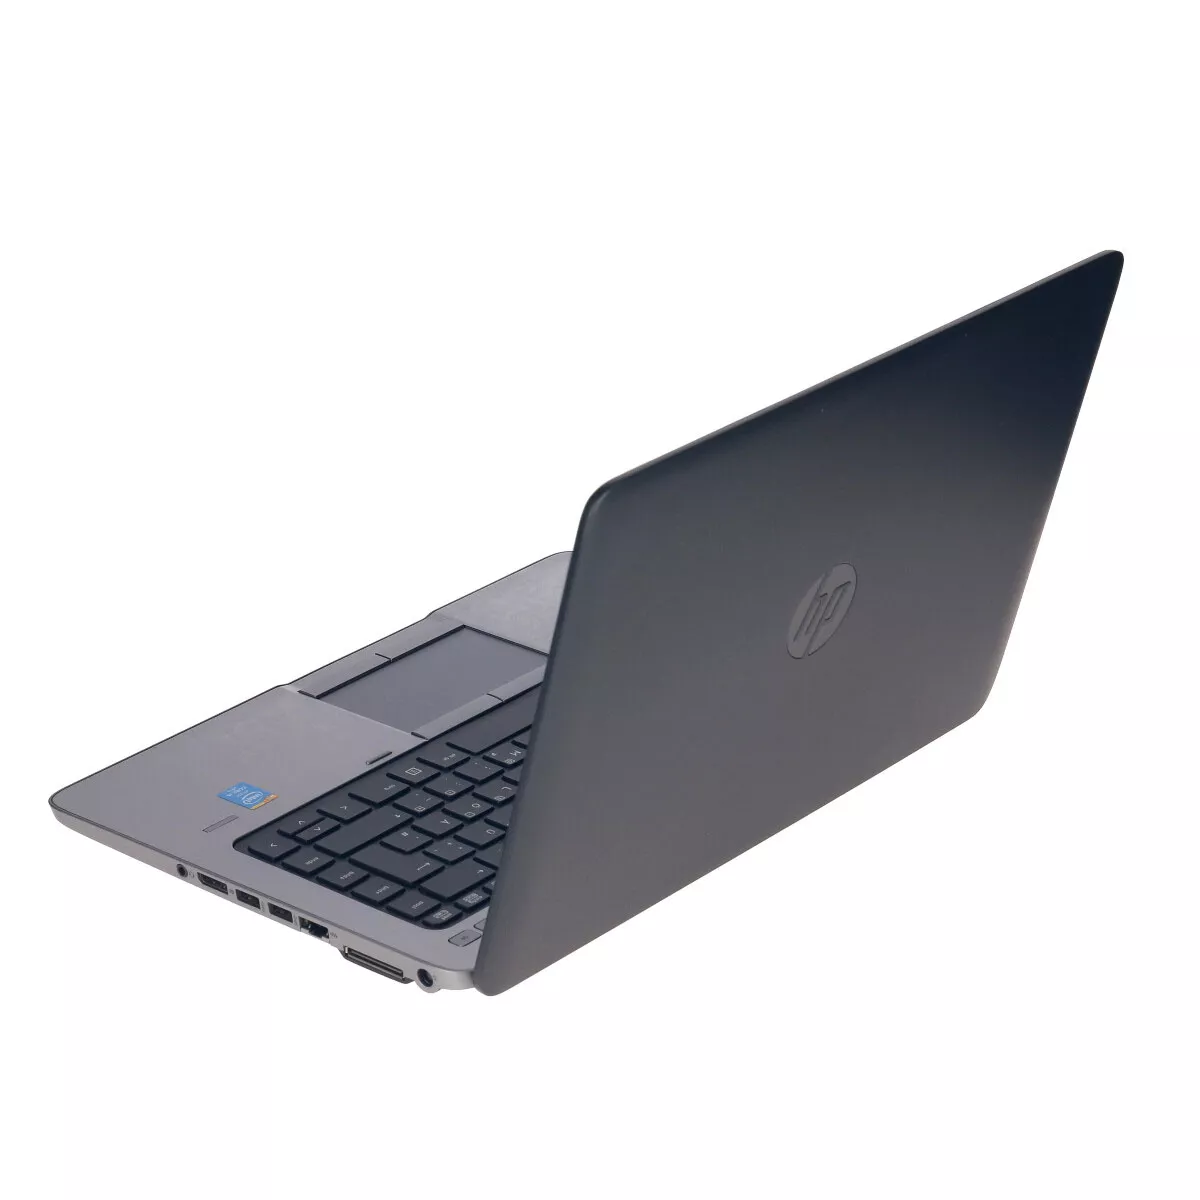 HP EliteBook 840 G1 Core i5 4300U 1,9 GHz Webcam B-Ware